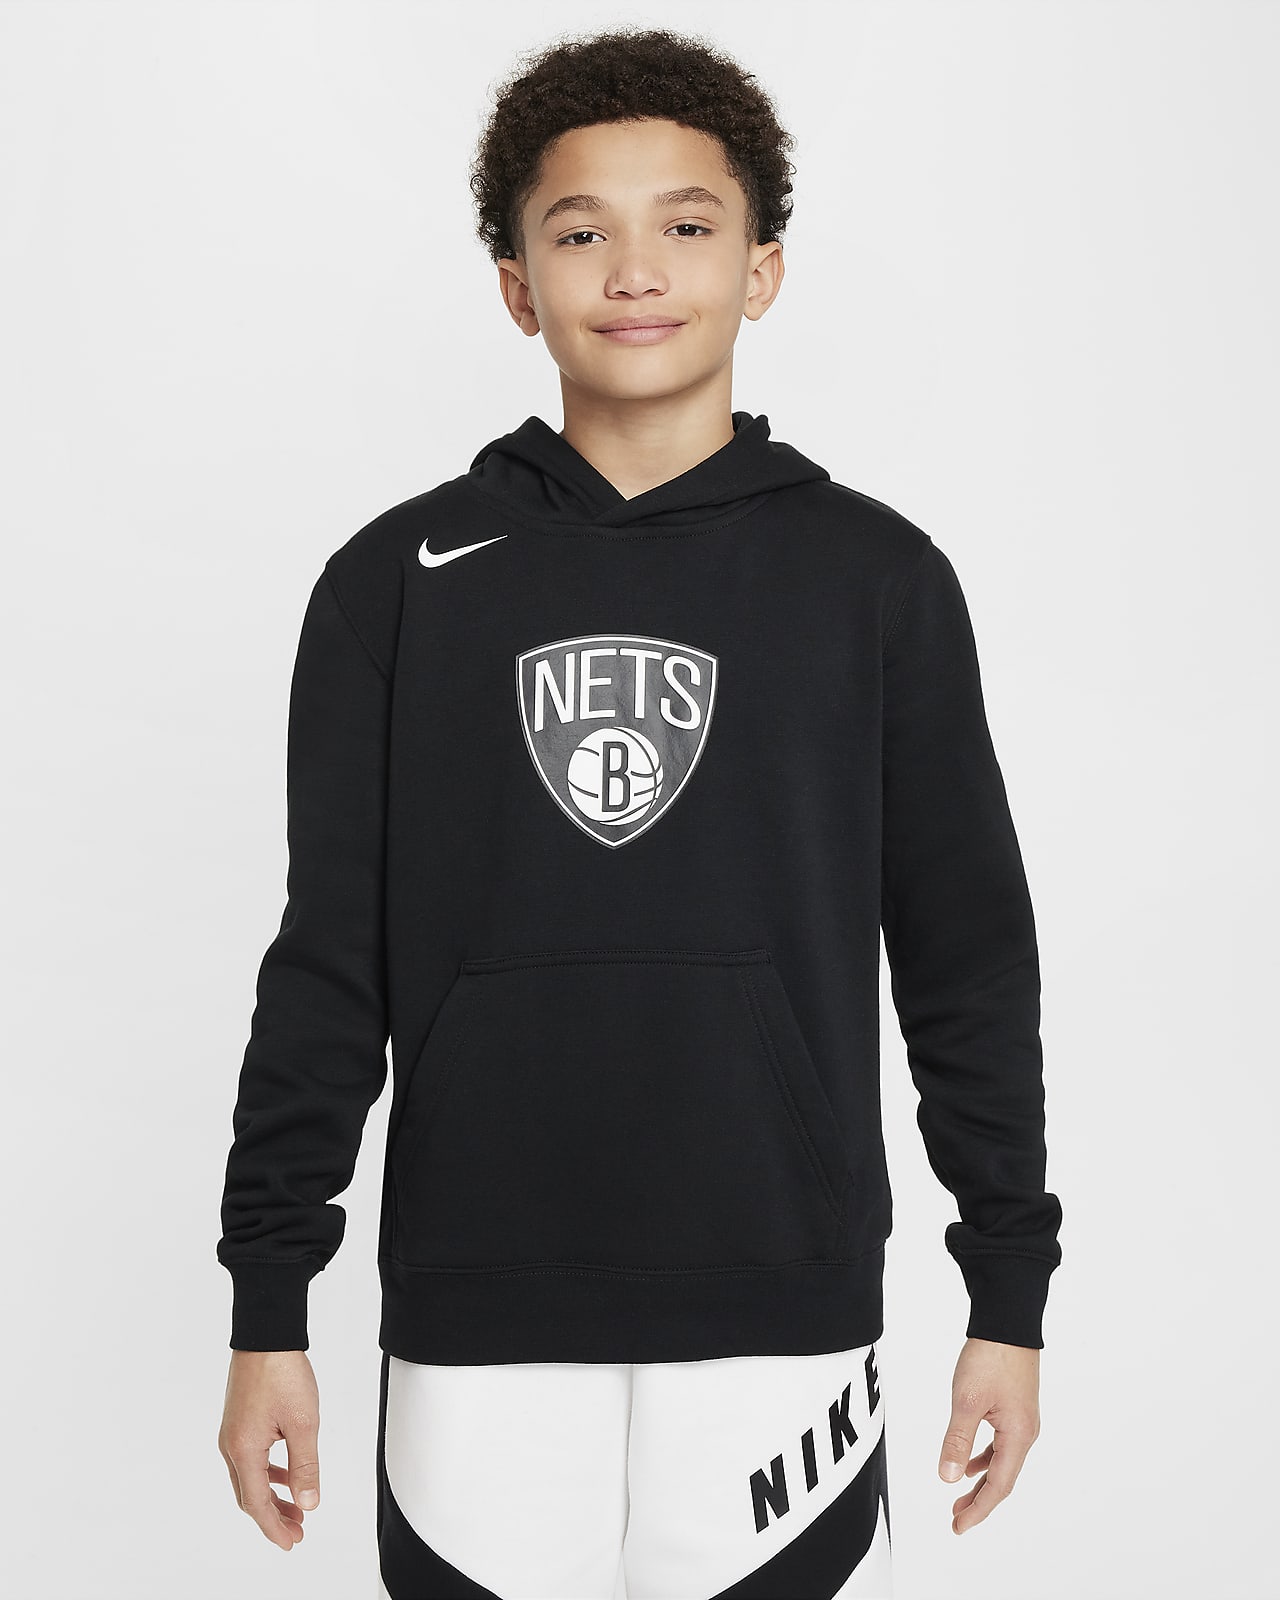 Brooklyn Nets Club Nike NBA-pullover-hættetrøje i fleece til større børn